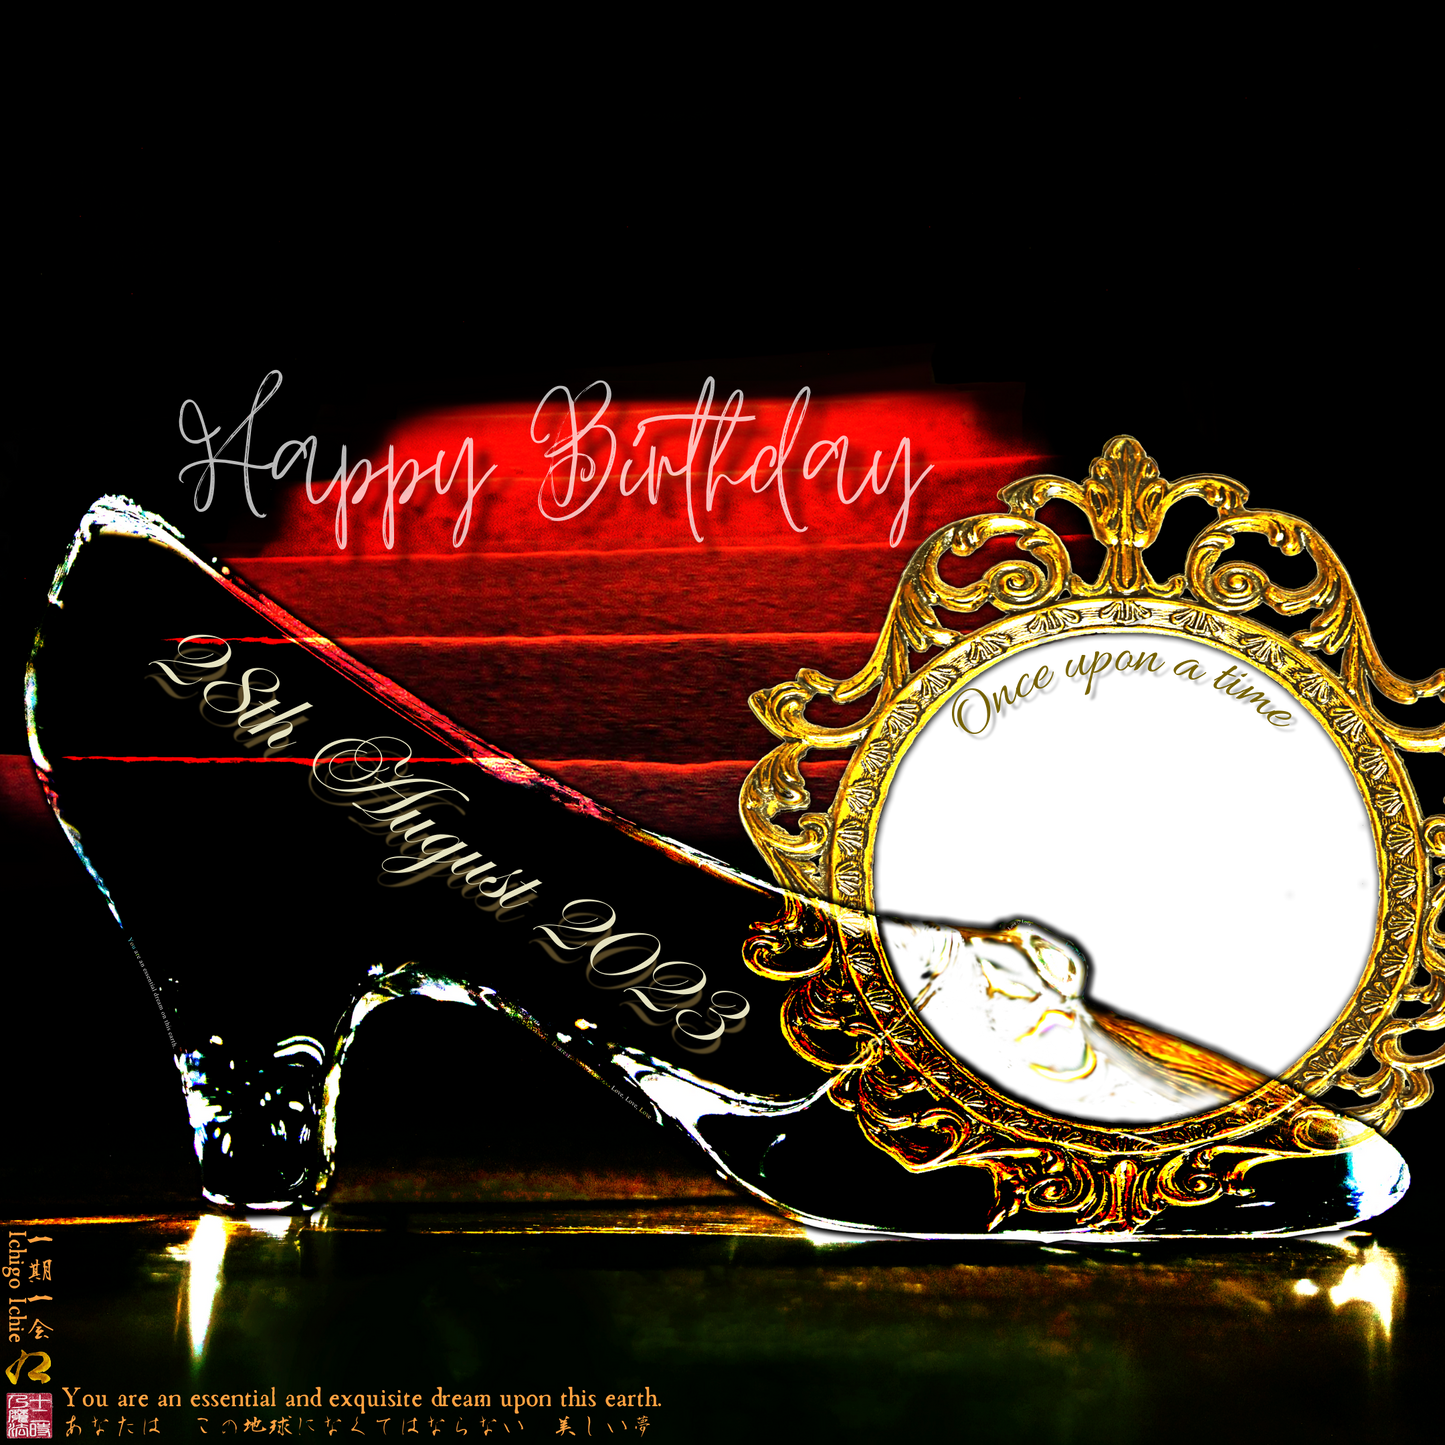 Happy Birthday Glass Slipper "Ichigo Ichie" 28th August 2023 the Right (1-of-1) NFT Art